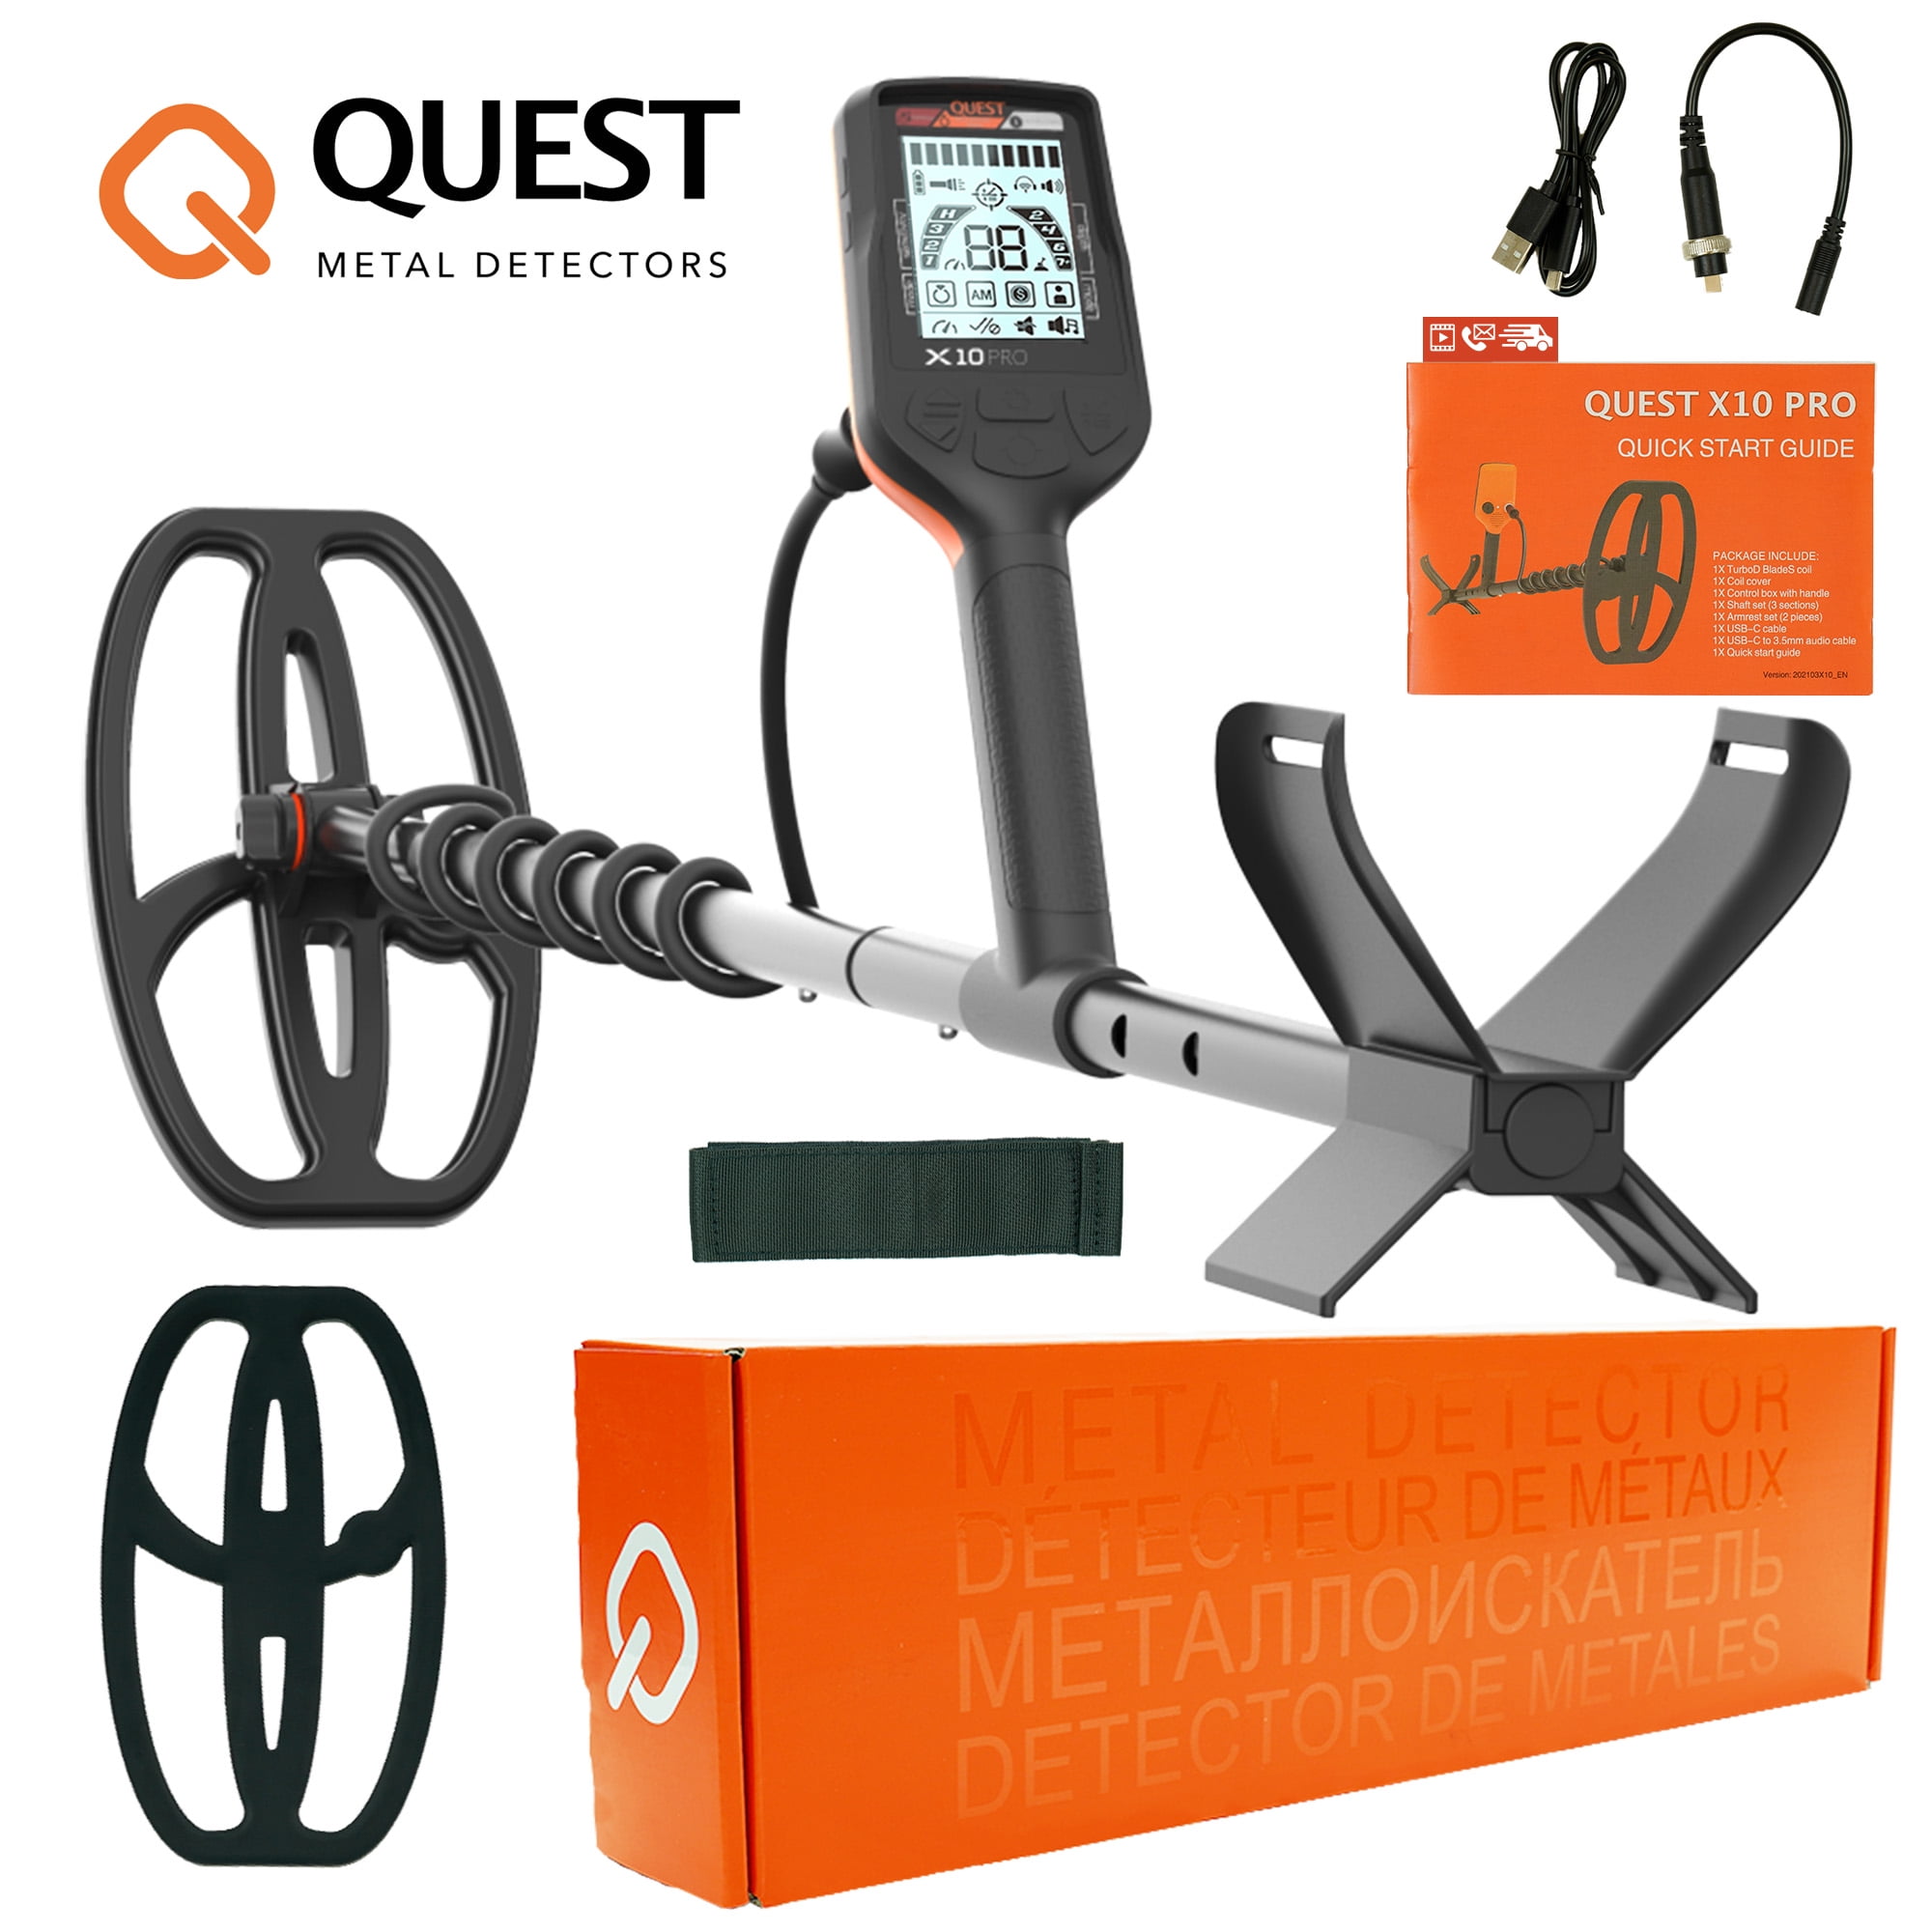 Quest X10 Pro Metalldetektor